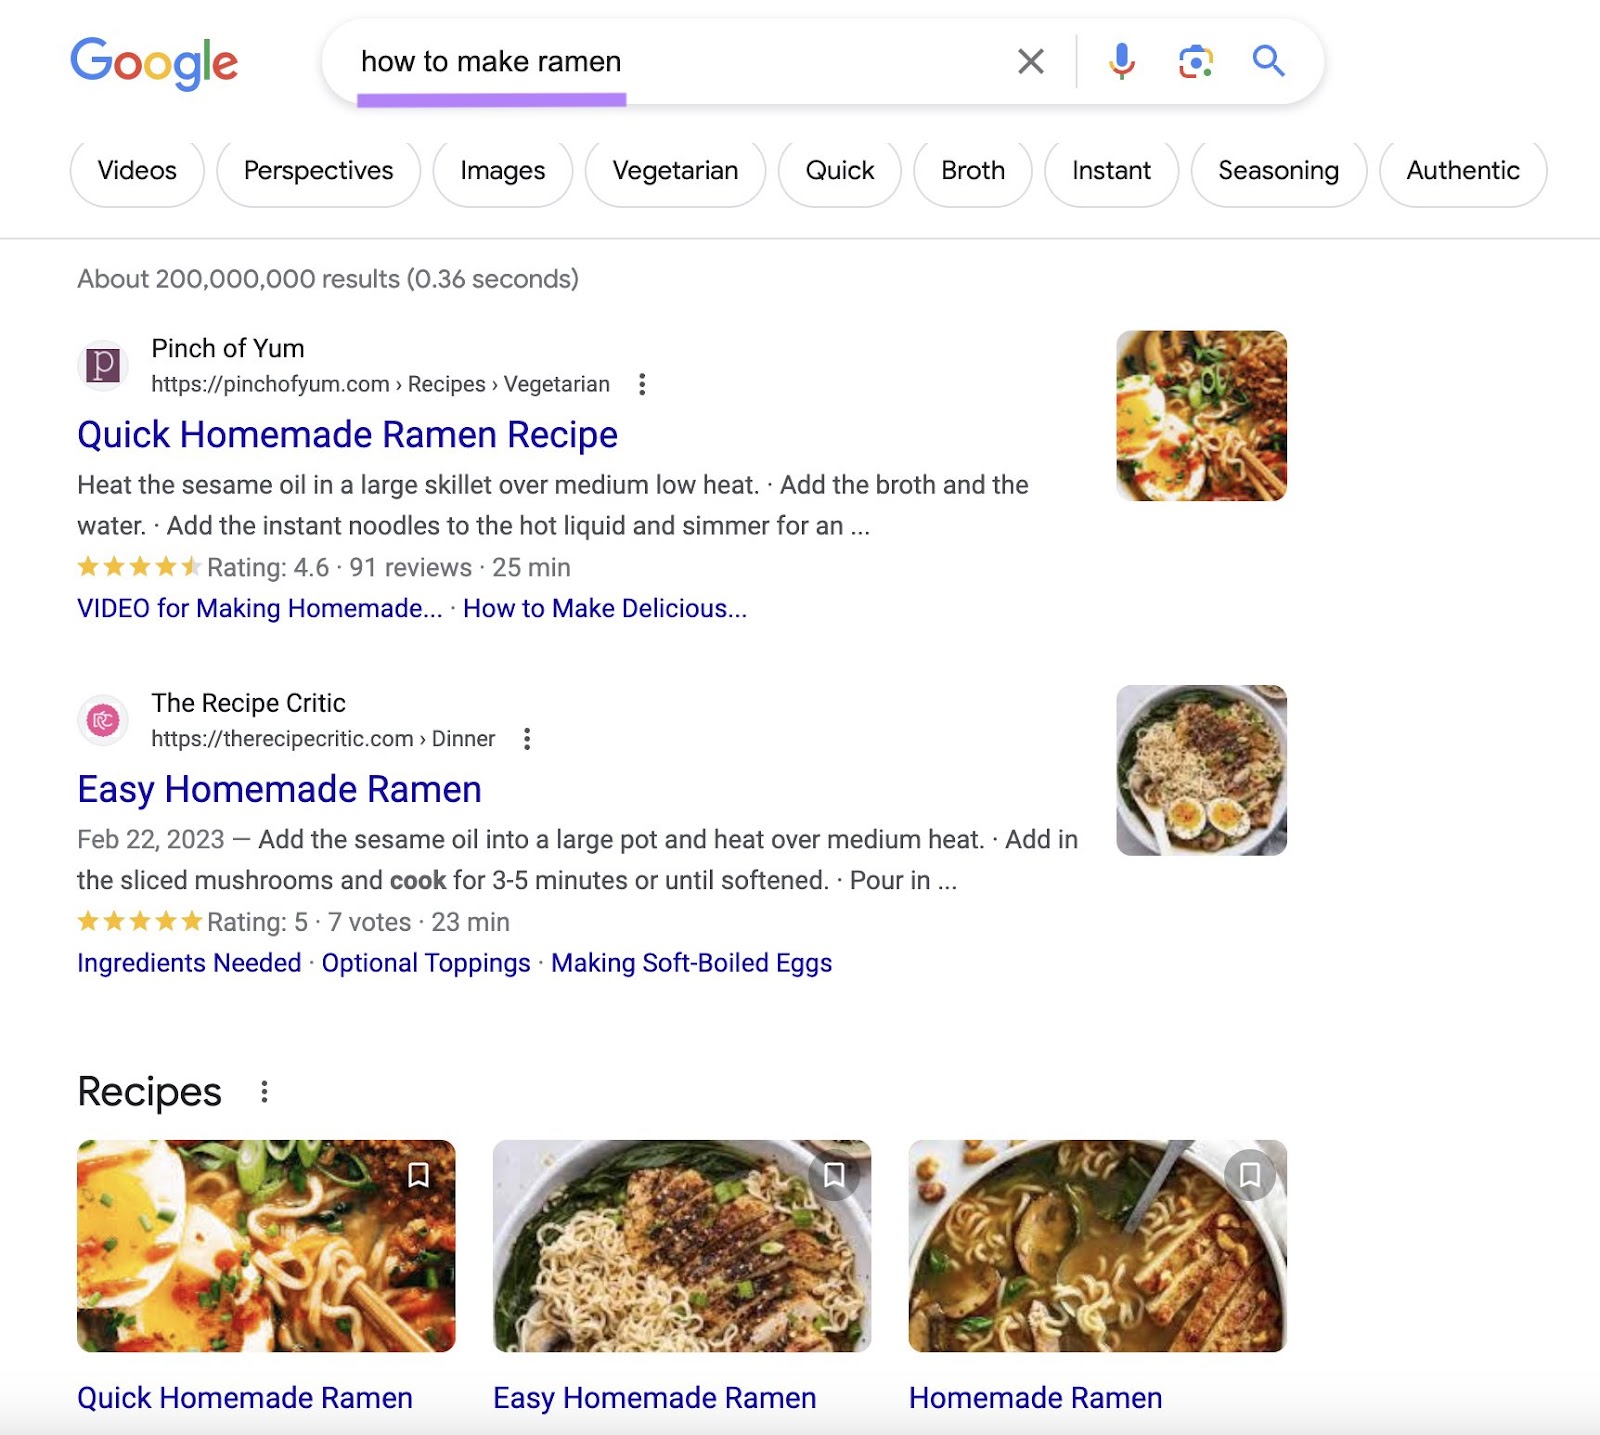 Google's SERP for "how to make ramen" query